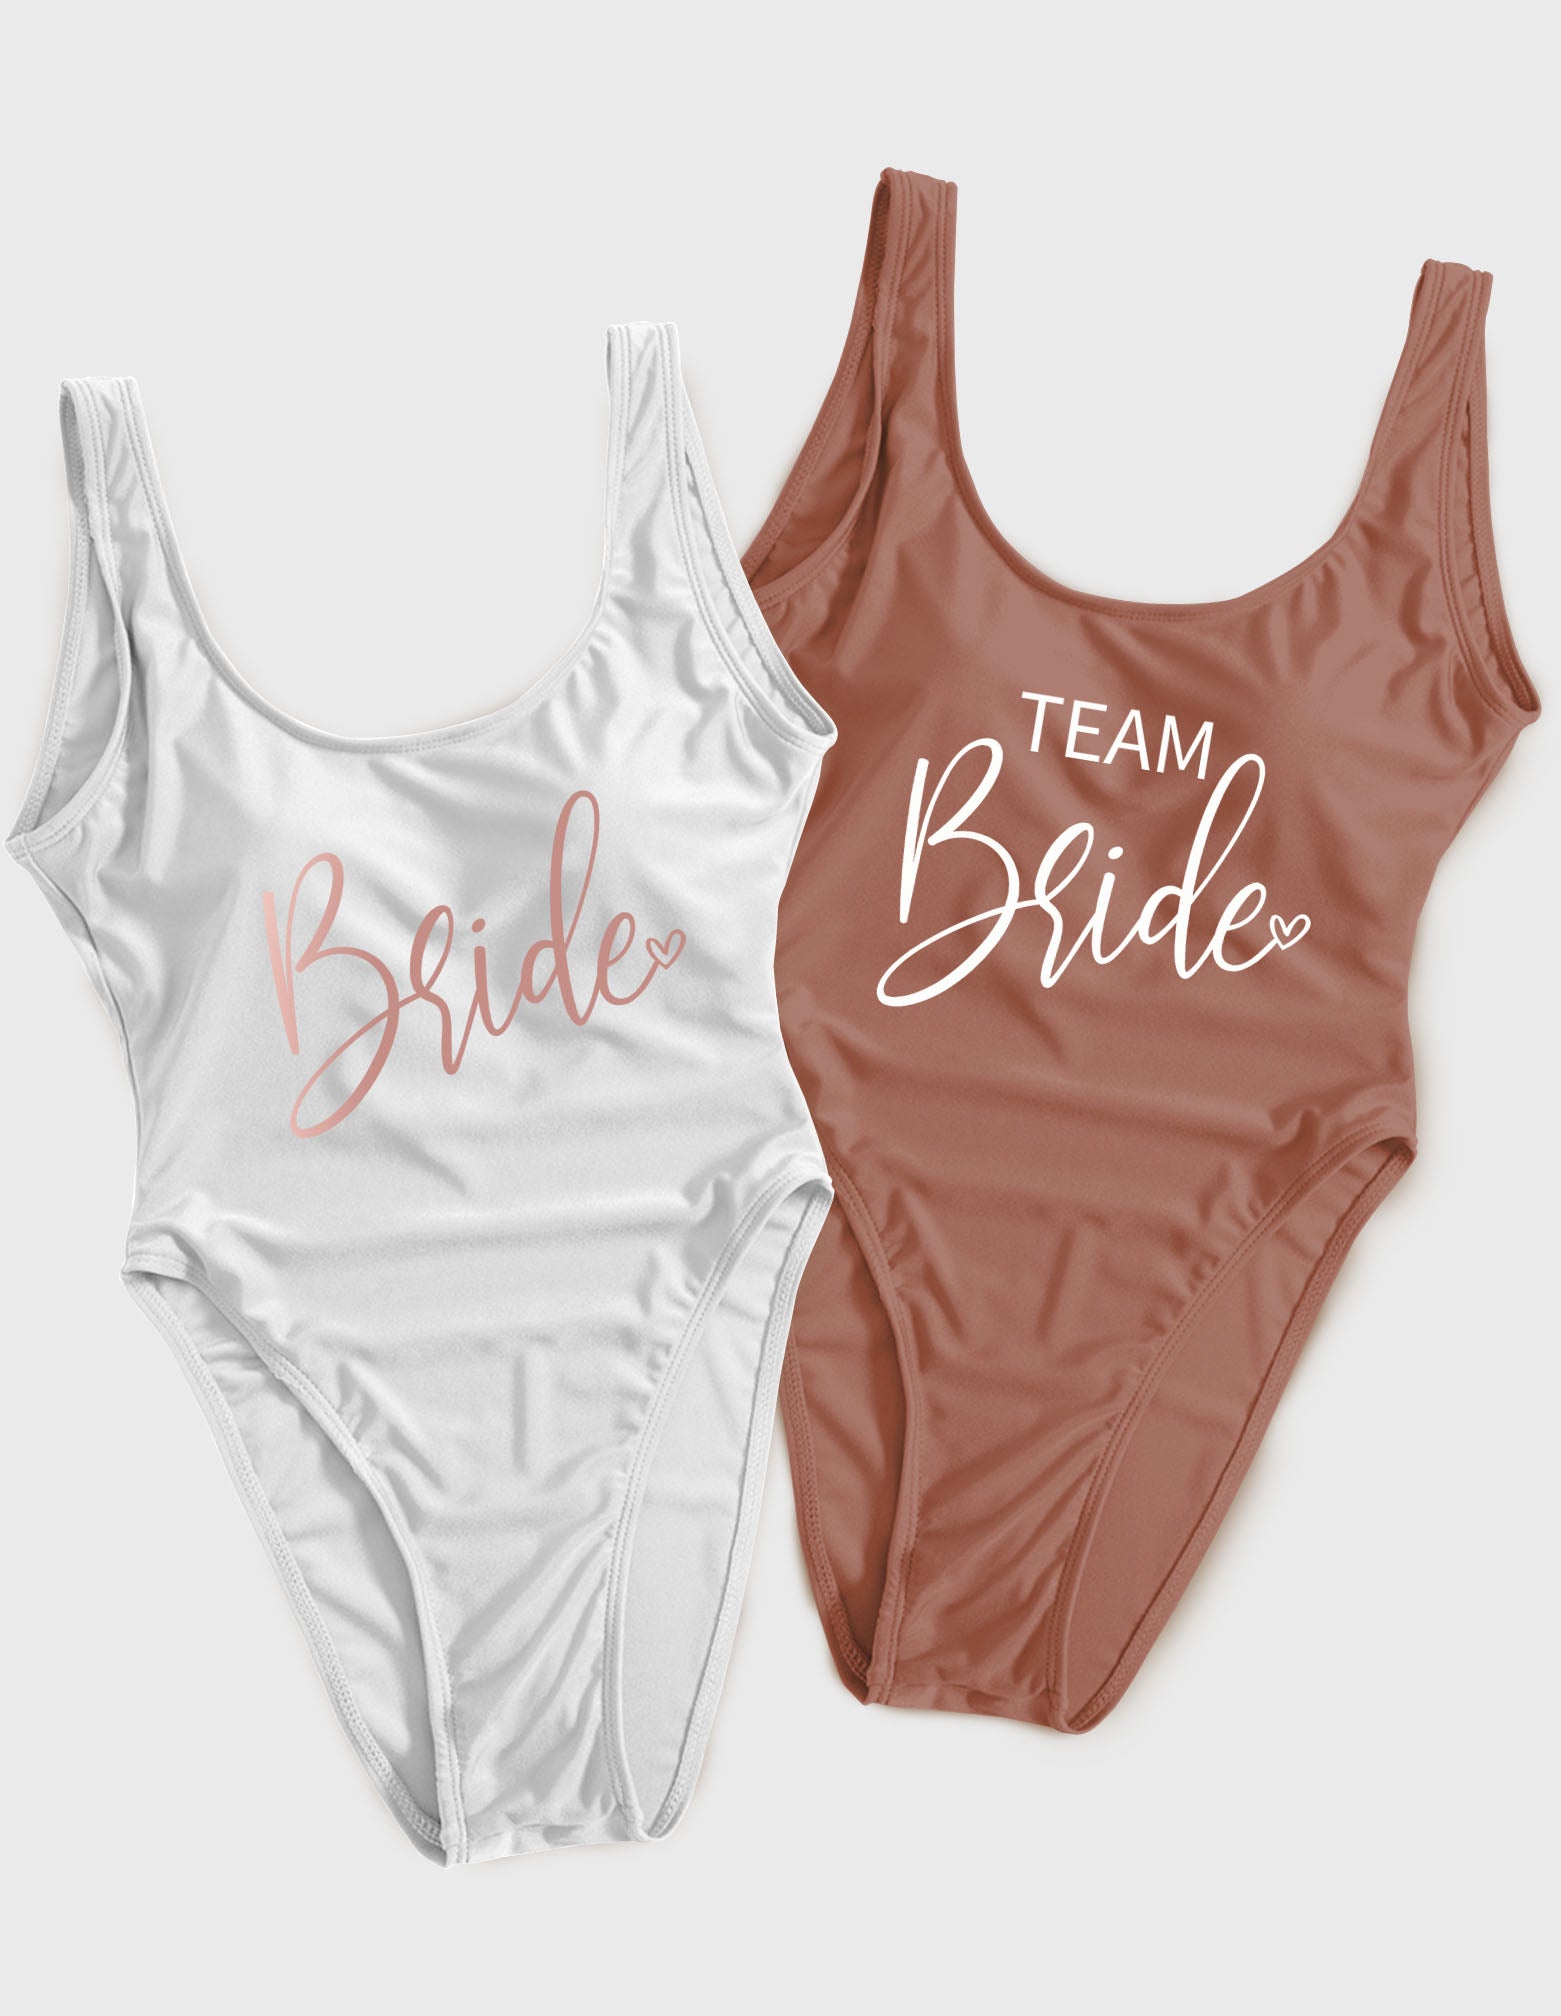 Bride & Team Bride Bachelorette Swimsuit